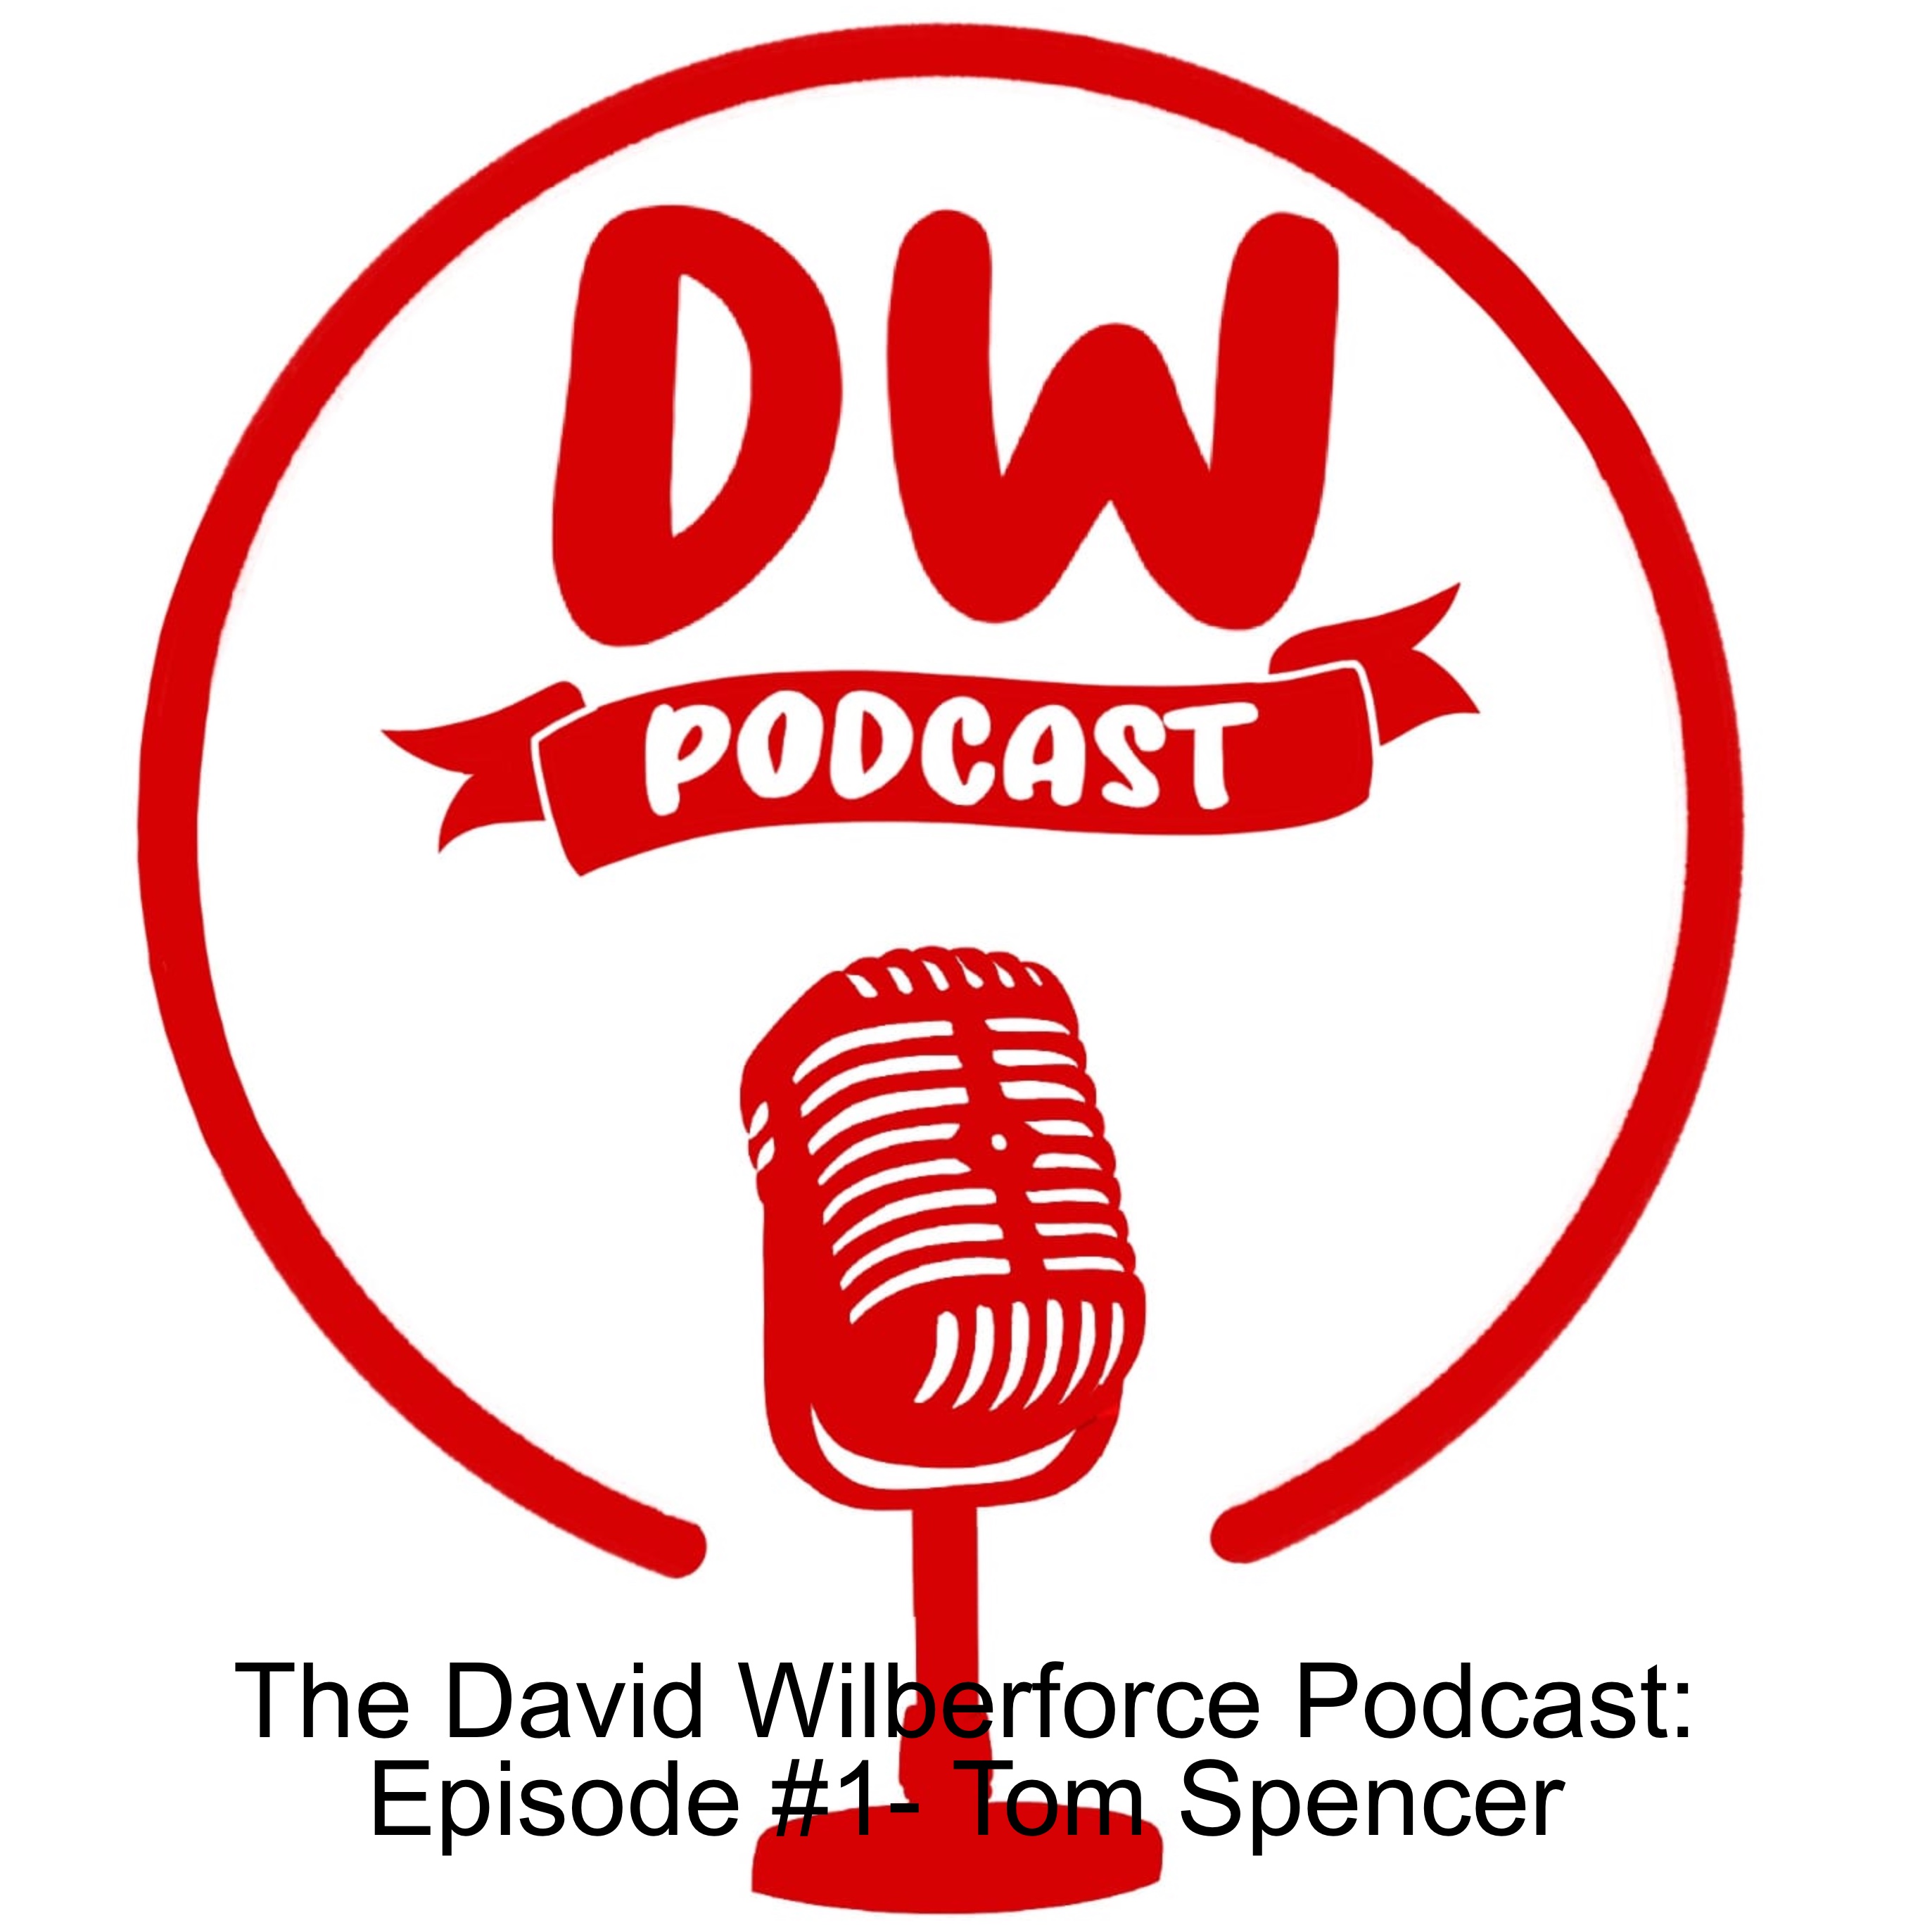 The David Wilberforce Podcast: Episode #1- Tom Spencer